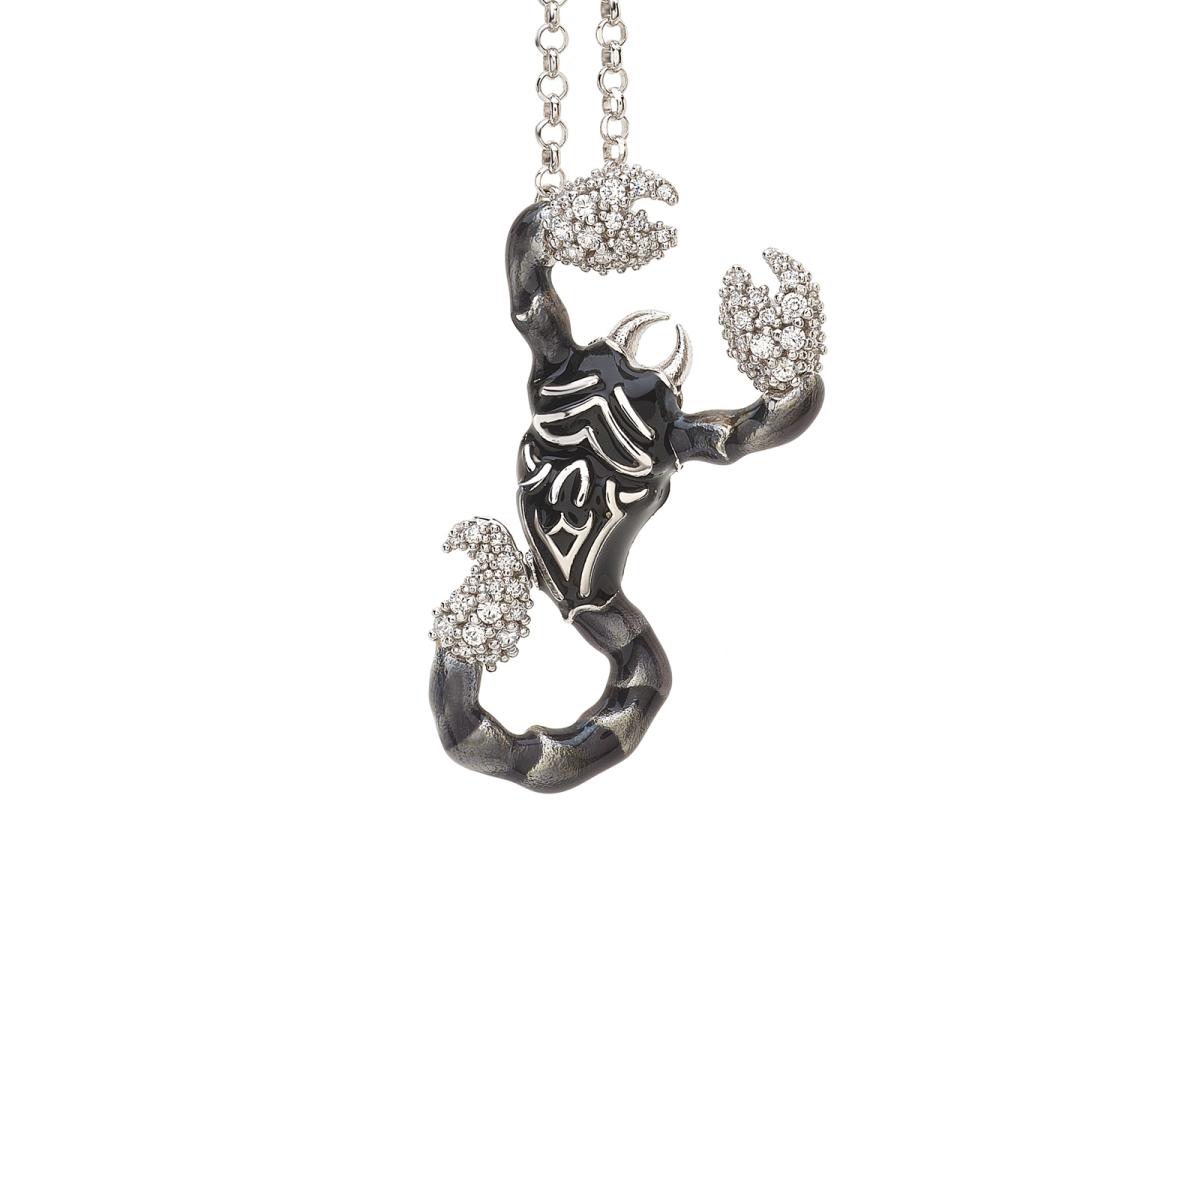 Silver necklace with medium enameled scorpion pendant